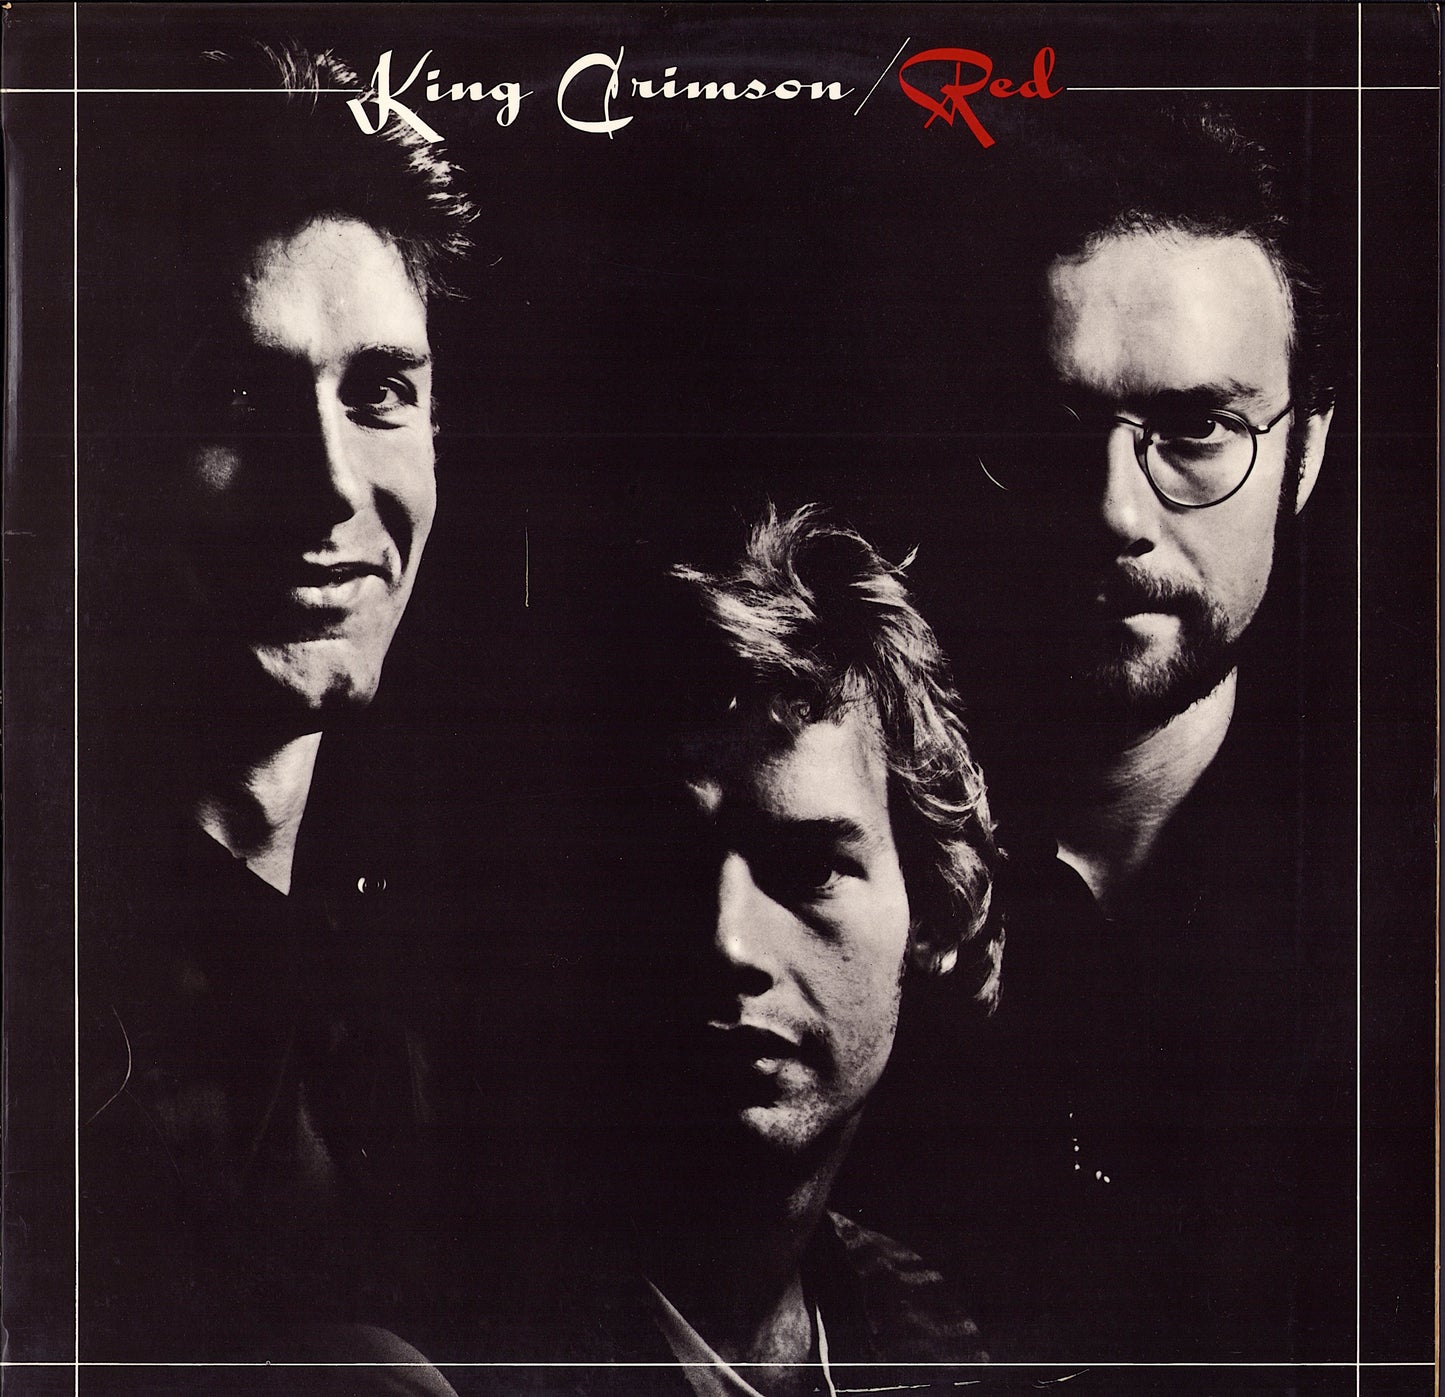 King Crimson ‎- Red Vinyl LP